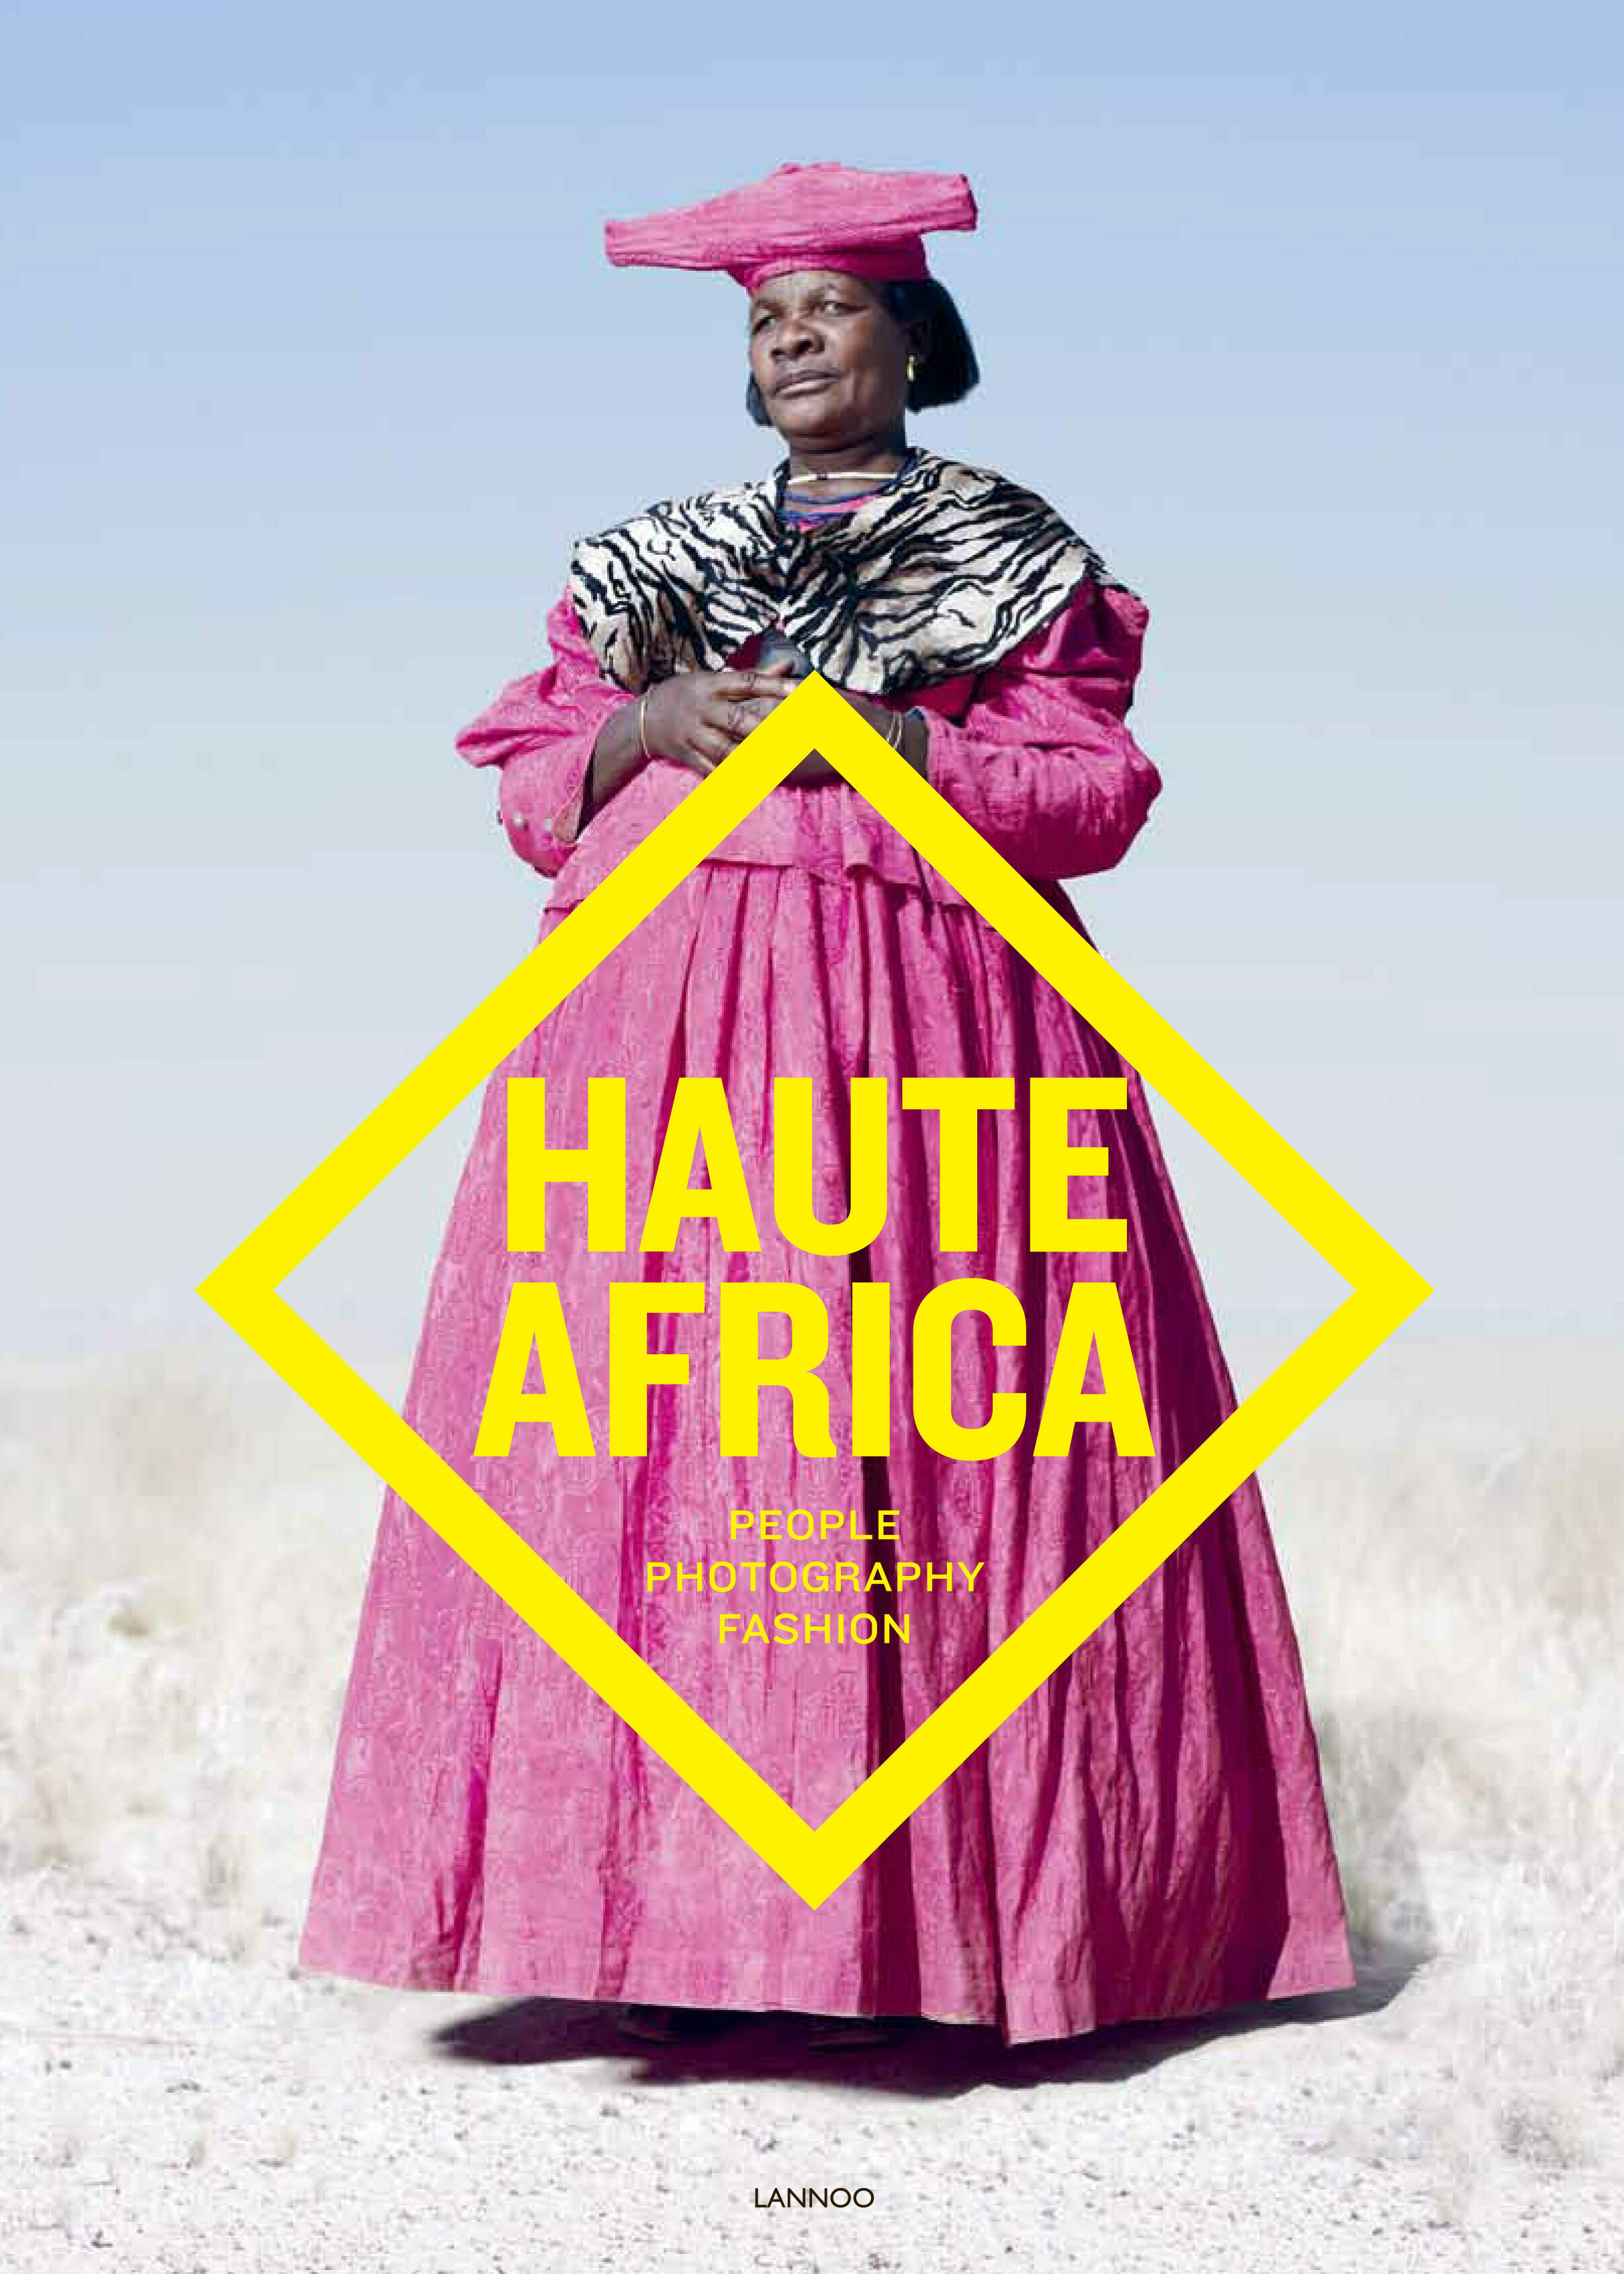 haute africa people. photography. fashion, christophe de jaeger, ramona van gansbeke, kunstbuch bildband fotobuch